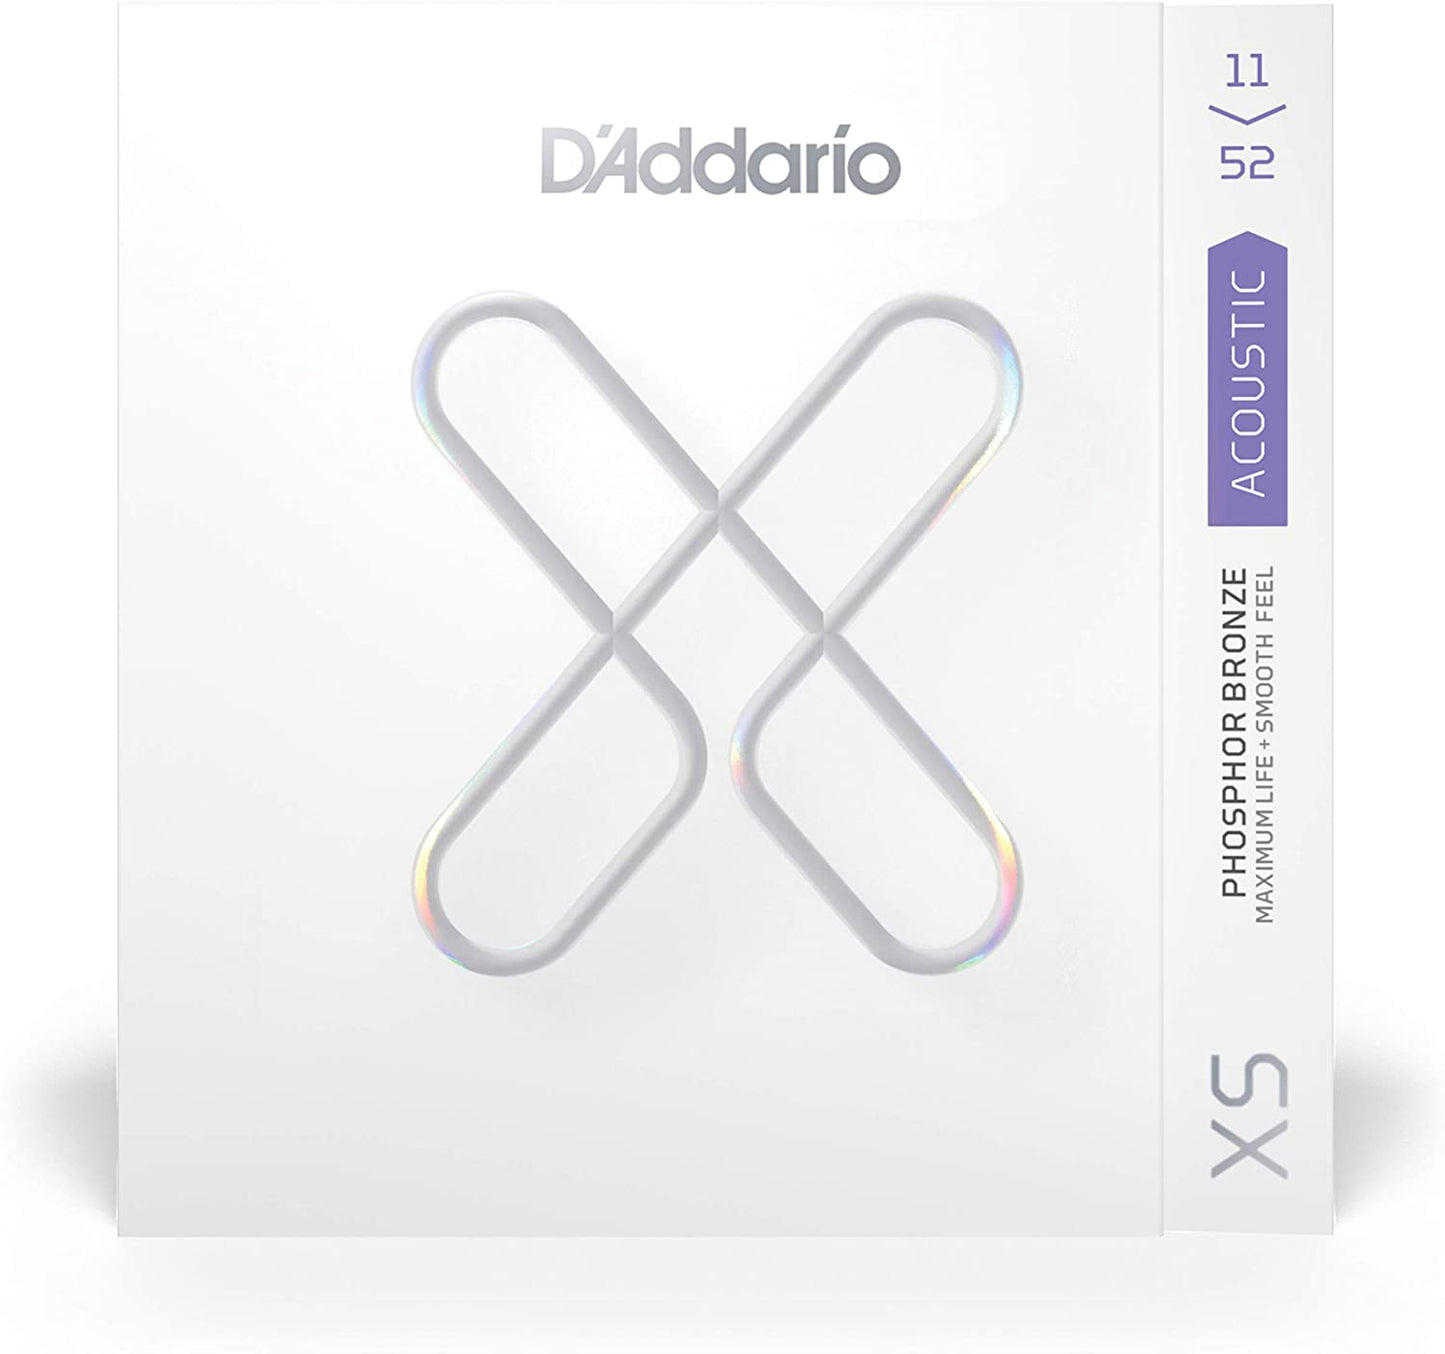 D'Addario XS Coated PB Acoustic Strings